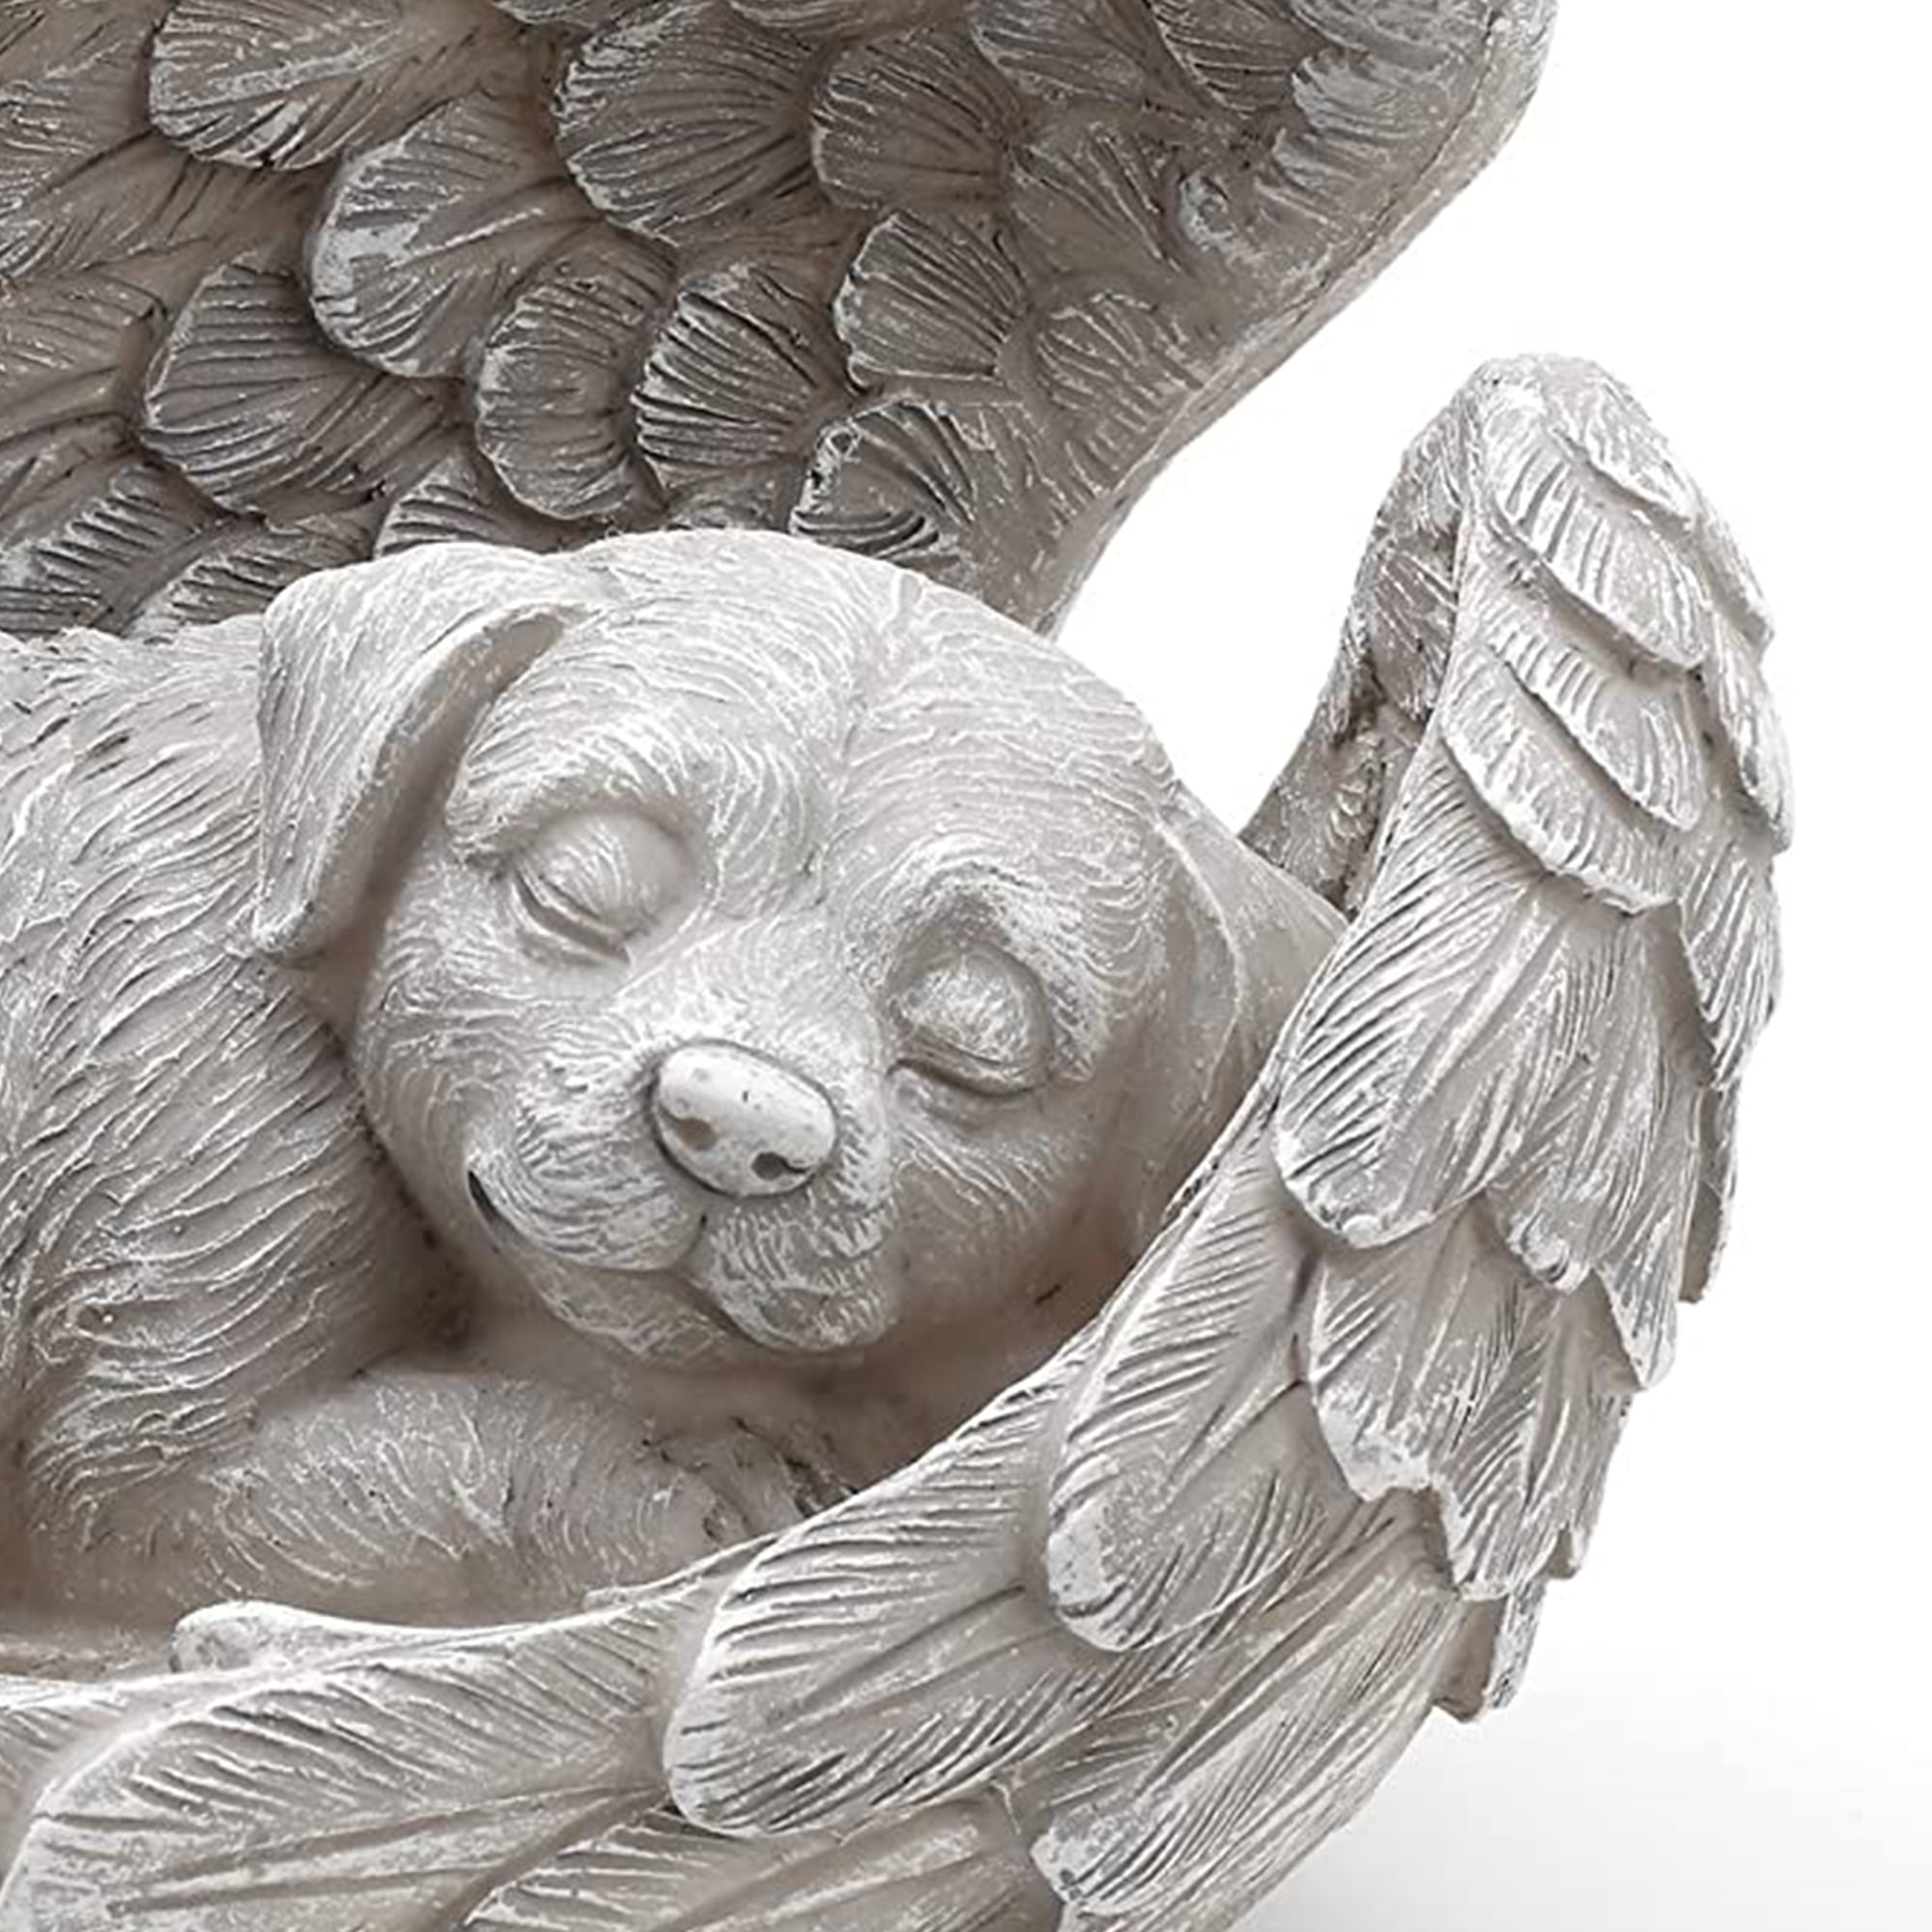 Faithful Memory of Dogs Bereavement Comfy Hour Resin Memorial Stone Sleeping Dog Angel Pet Statue Handmade 